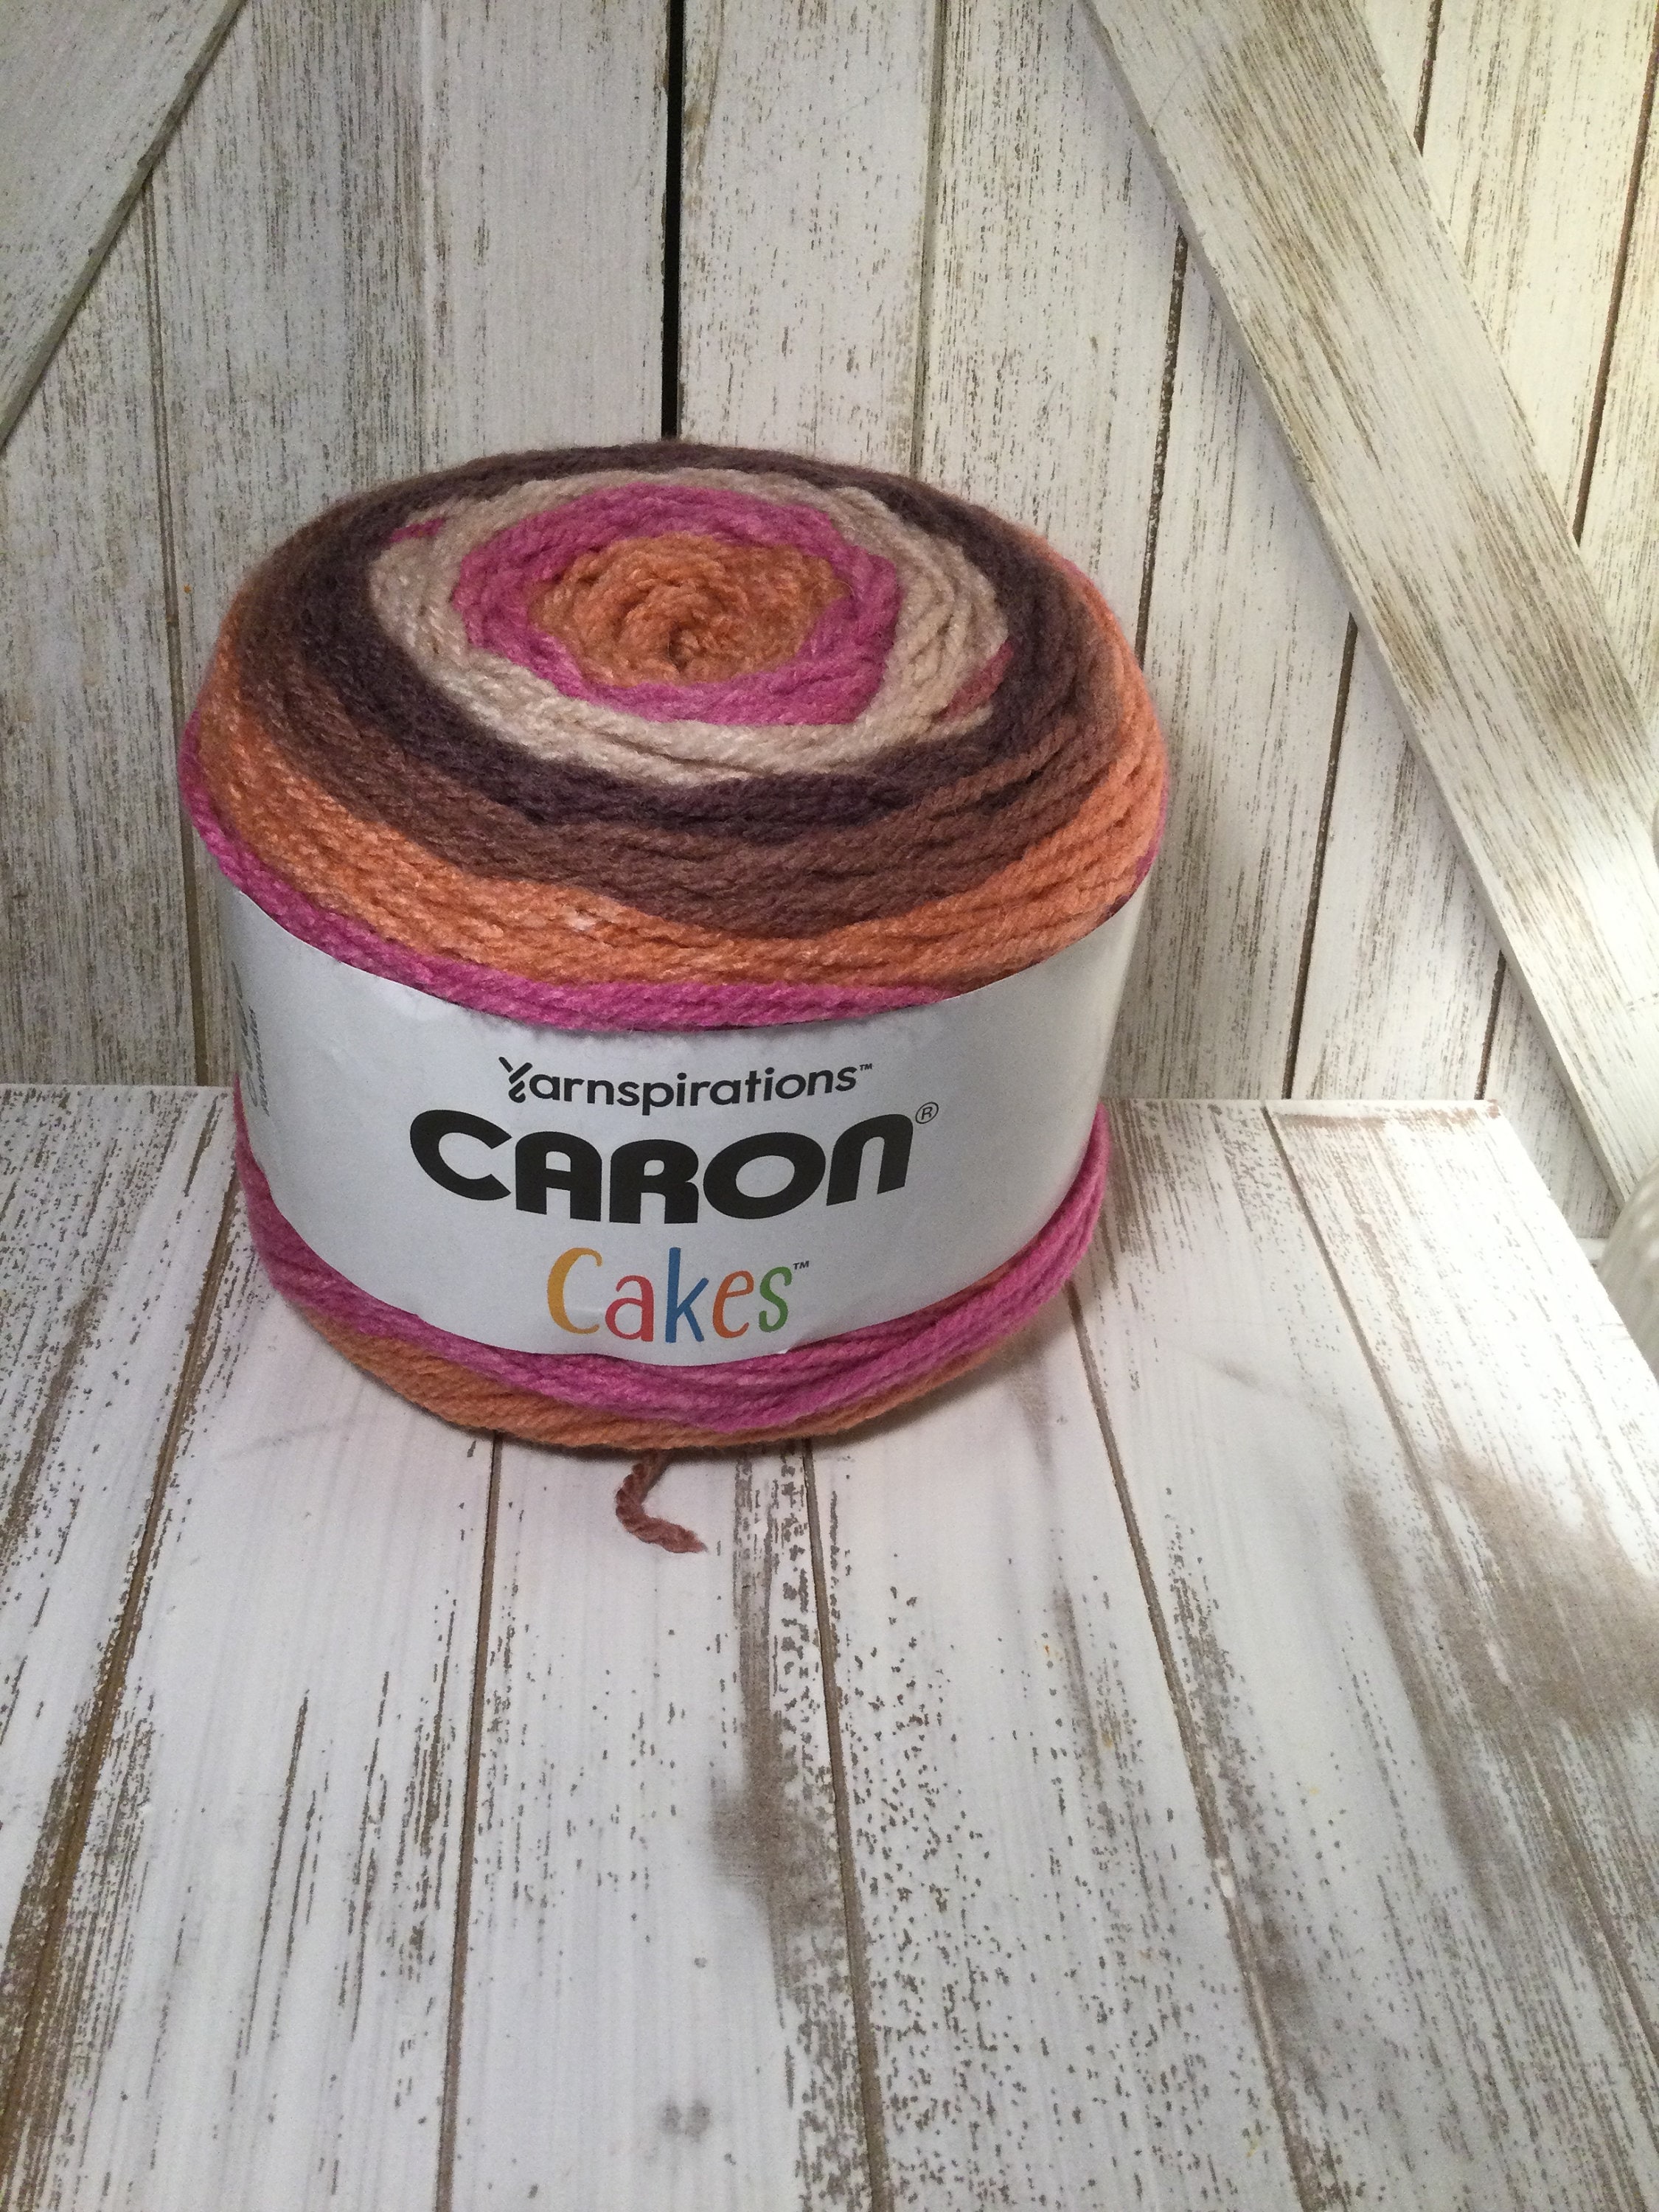 Caron Latte Cakes Yarn “Strawberry Flambe”